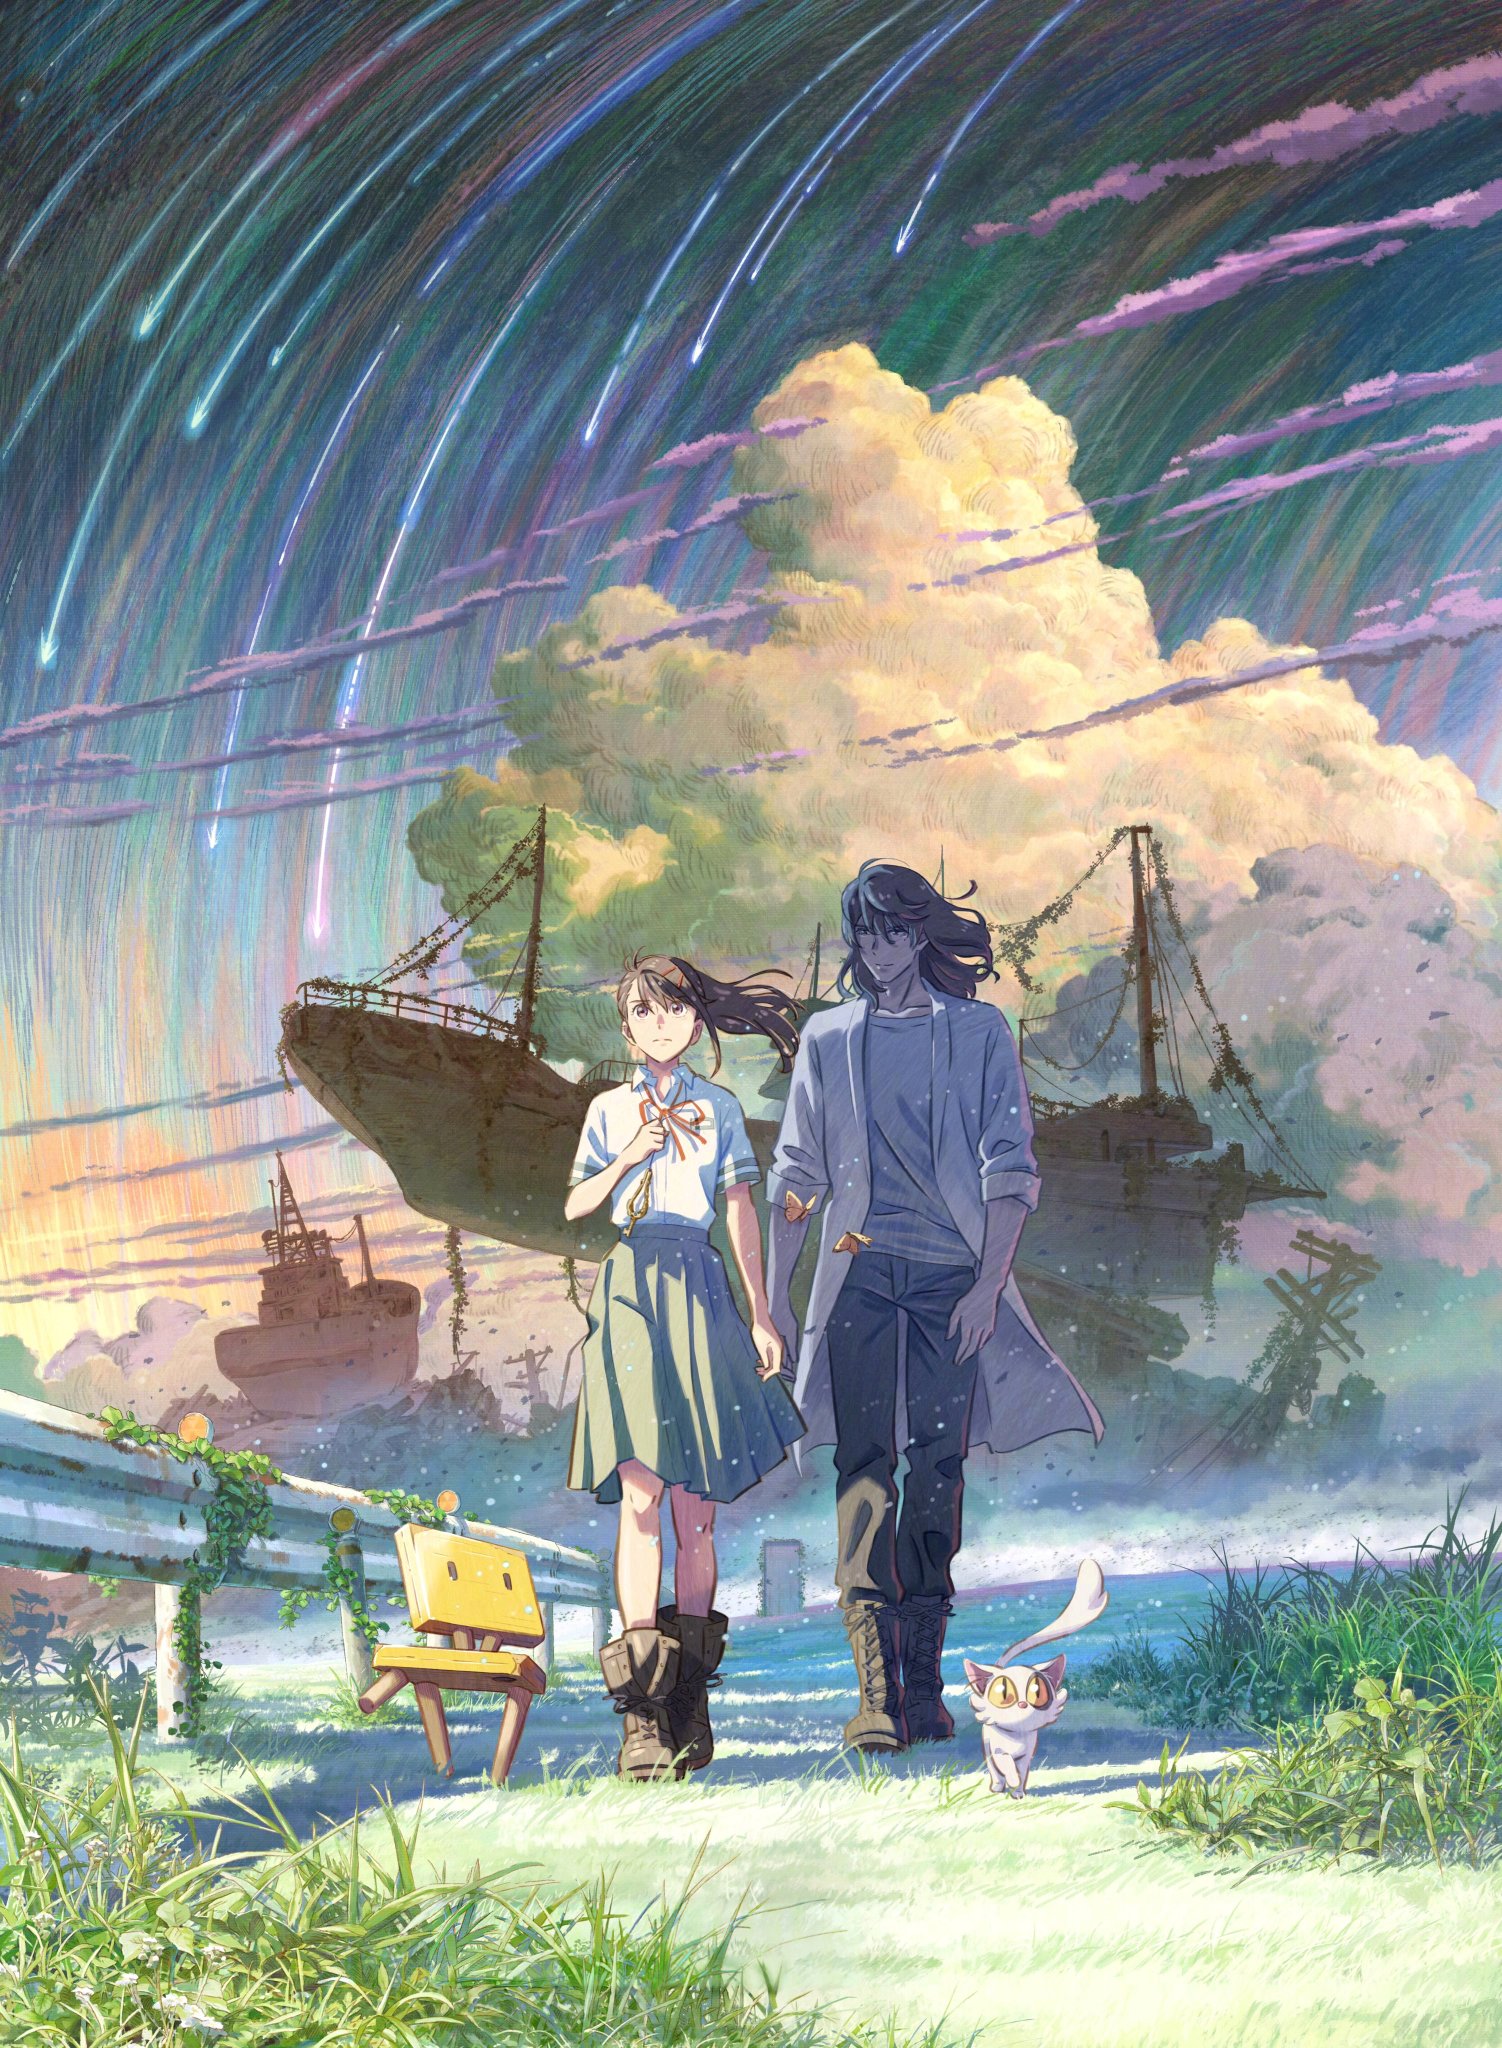 Anime News And Facts on X: MakotoShinkai's Suzume will release